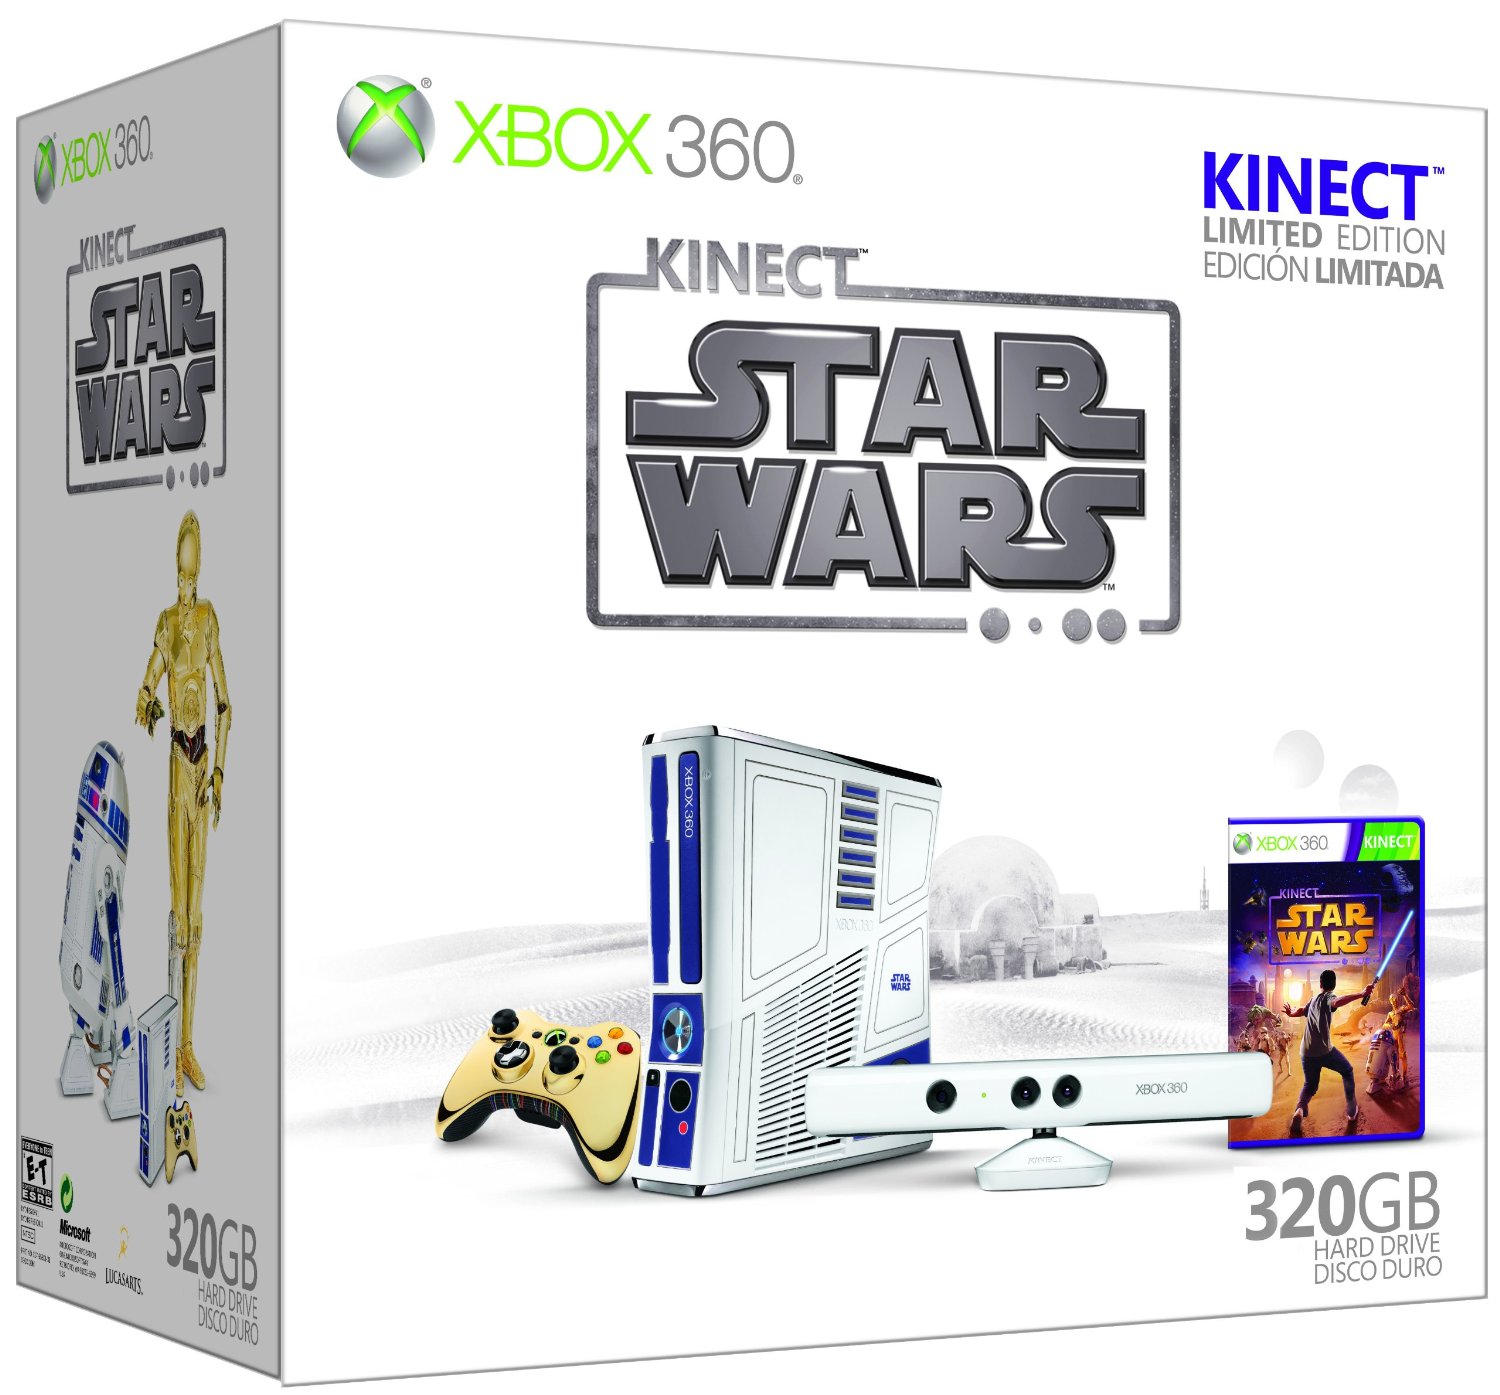 Xbox 360 Star Wars Gift